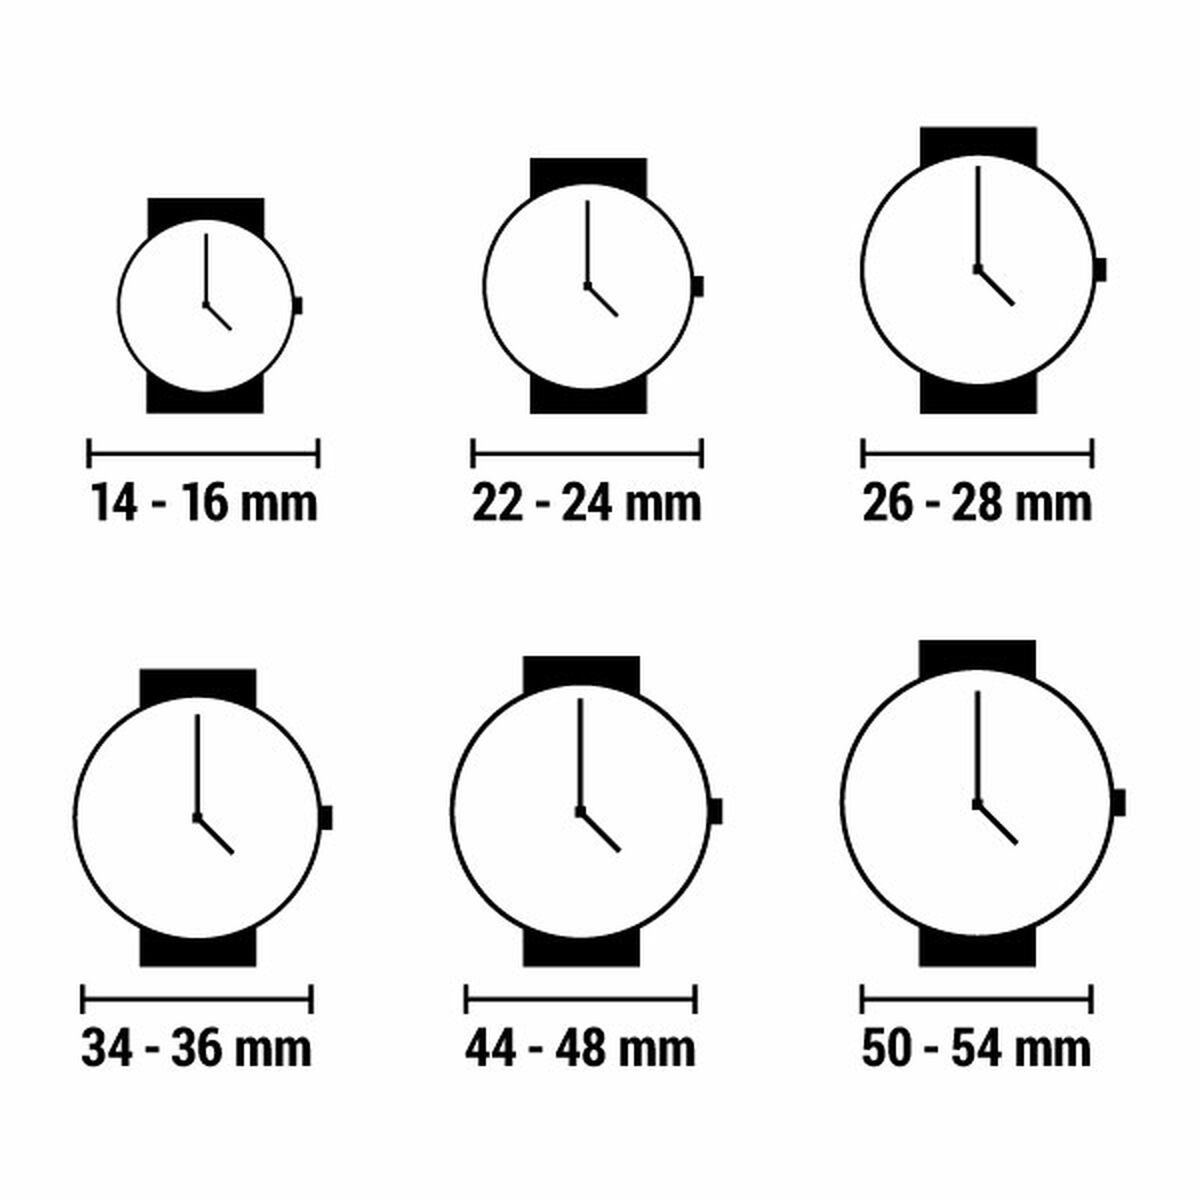 Horloge Dames Swatch GE713